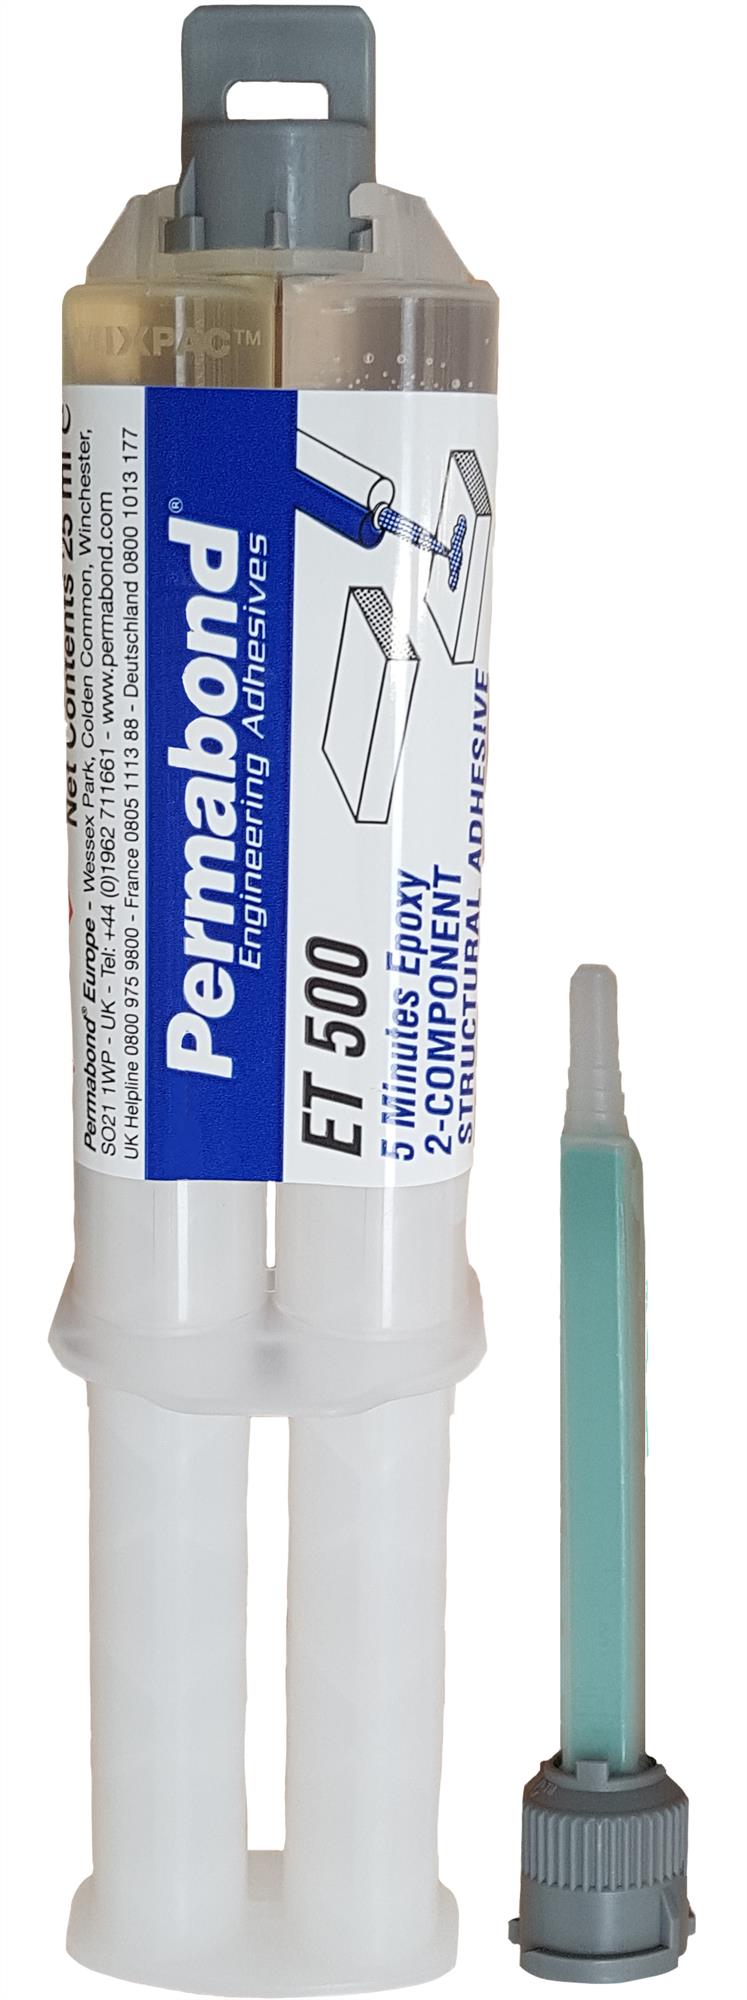 Permabond 2-part quick cure clear epoxy adhesive 25ml syringe/nozzle #ET500